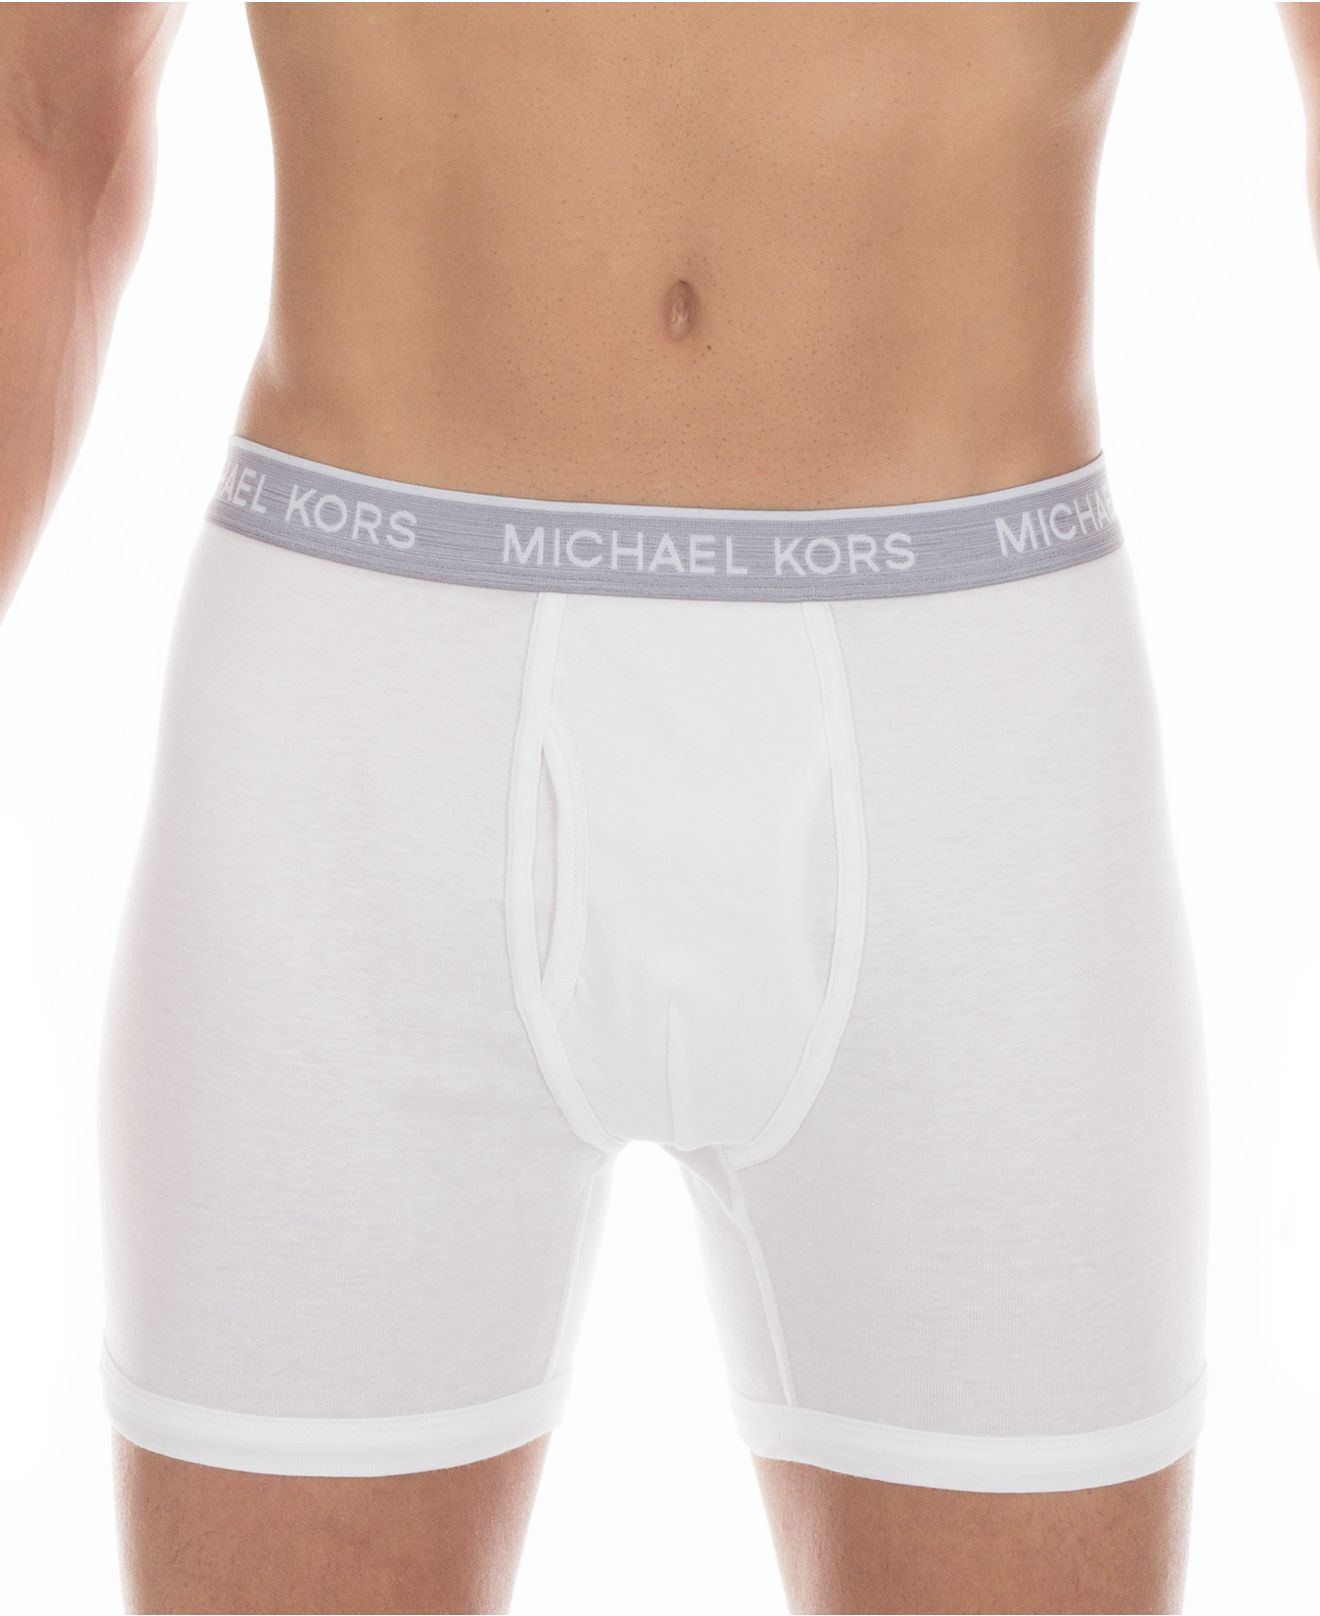 michael kors men's underwear brief